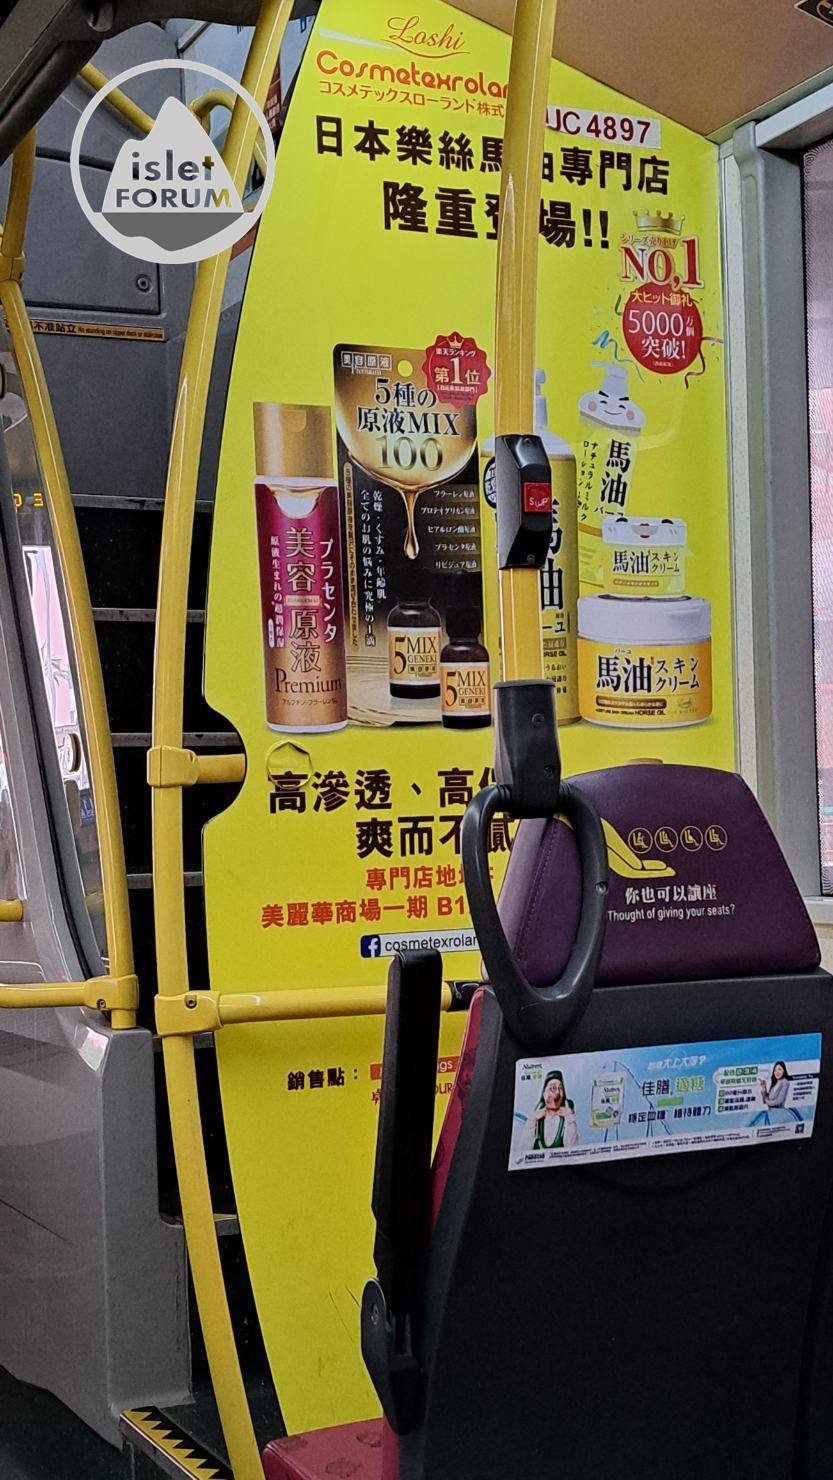 巴士上的廣告 ad on the bus (1).jpg